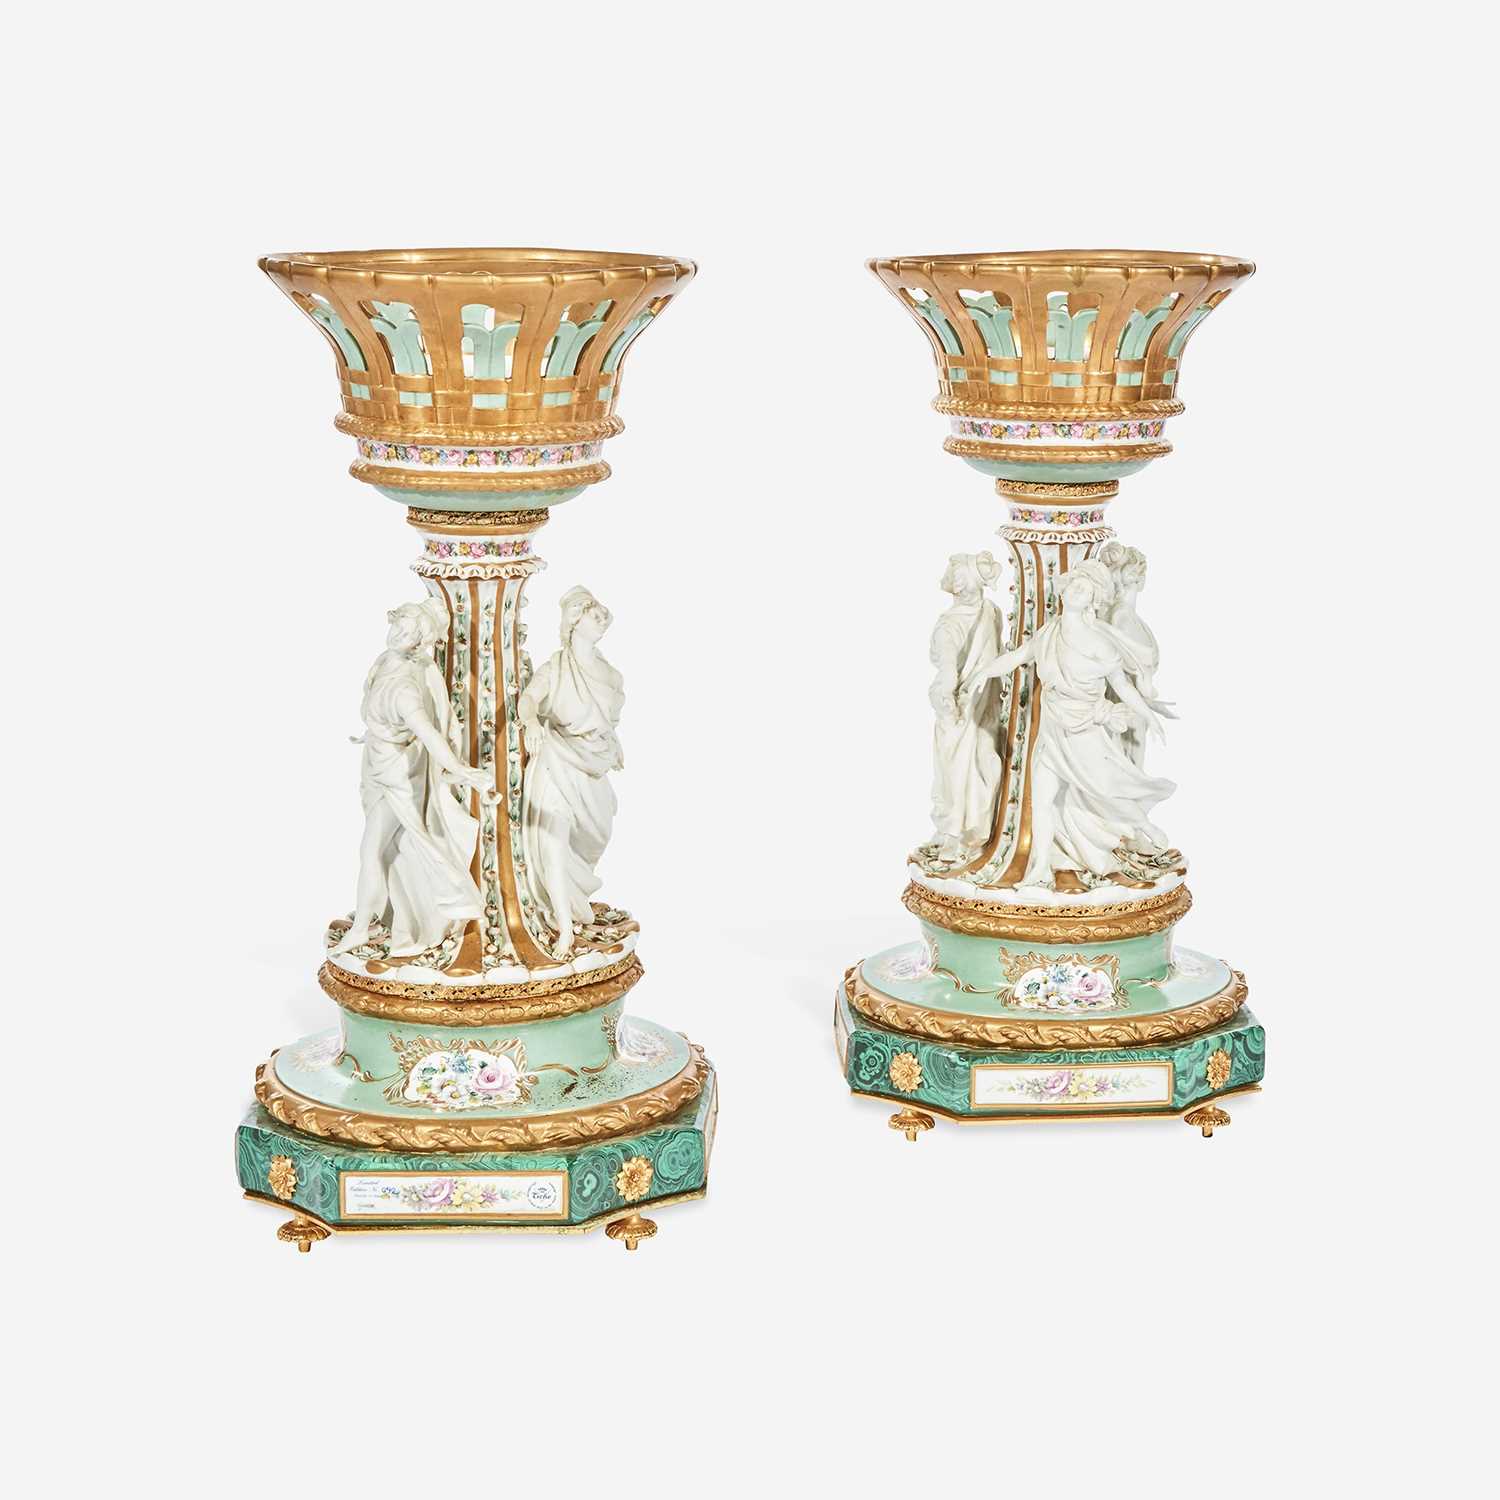 Lot 10 - A Large Pair of Tiche Louis XV Style Hand-Painted Porcelain Figural Centerpieces